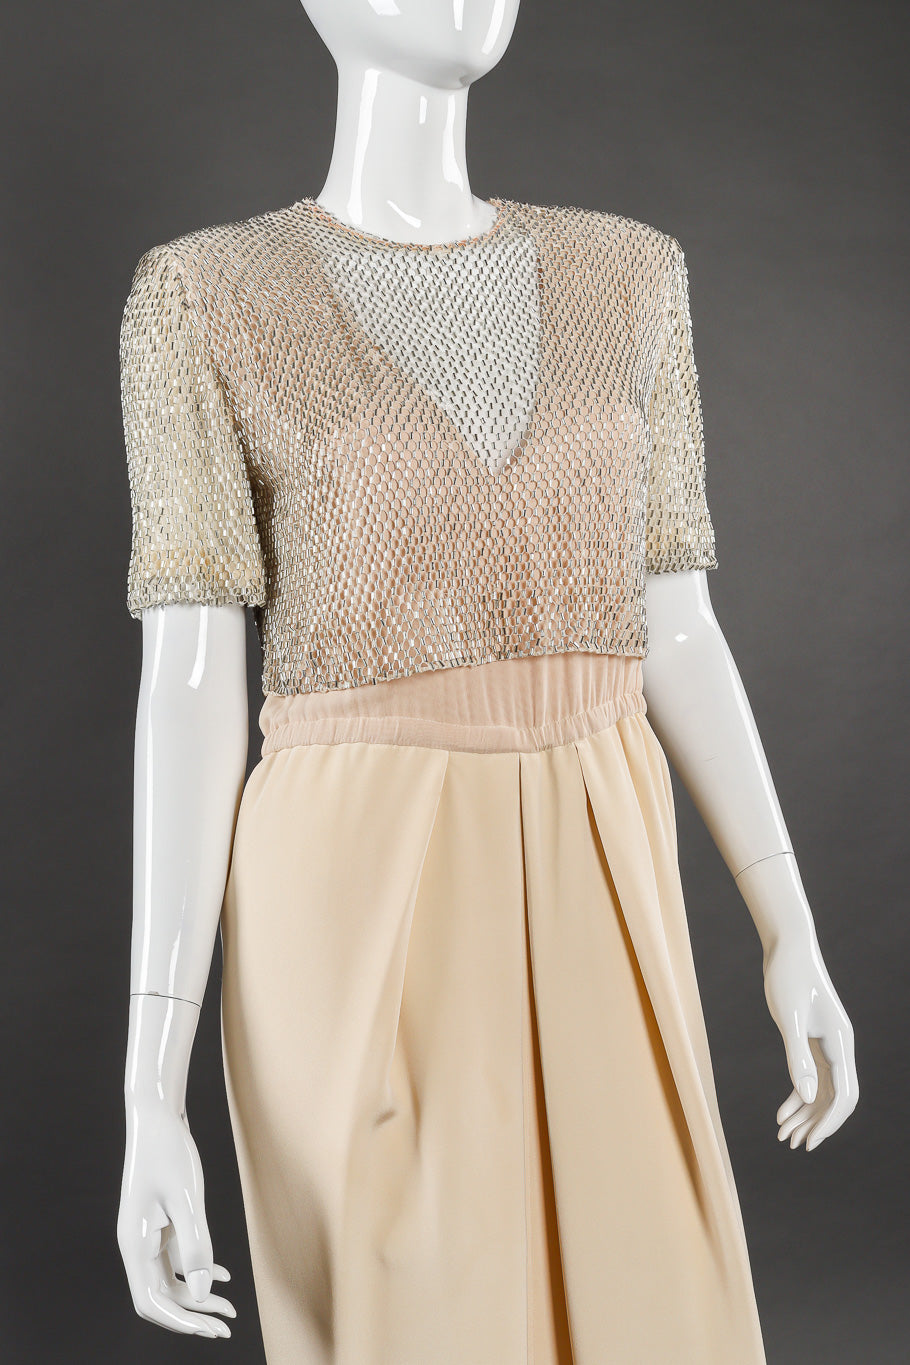 Vintage Sansappelle Beaded Chainmail Dress front view on mannequin closeup @Recessla